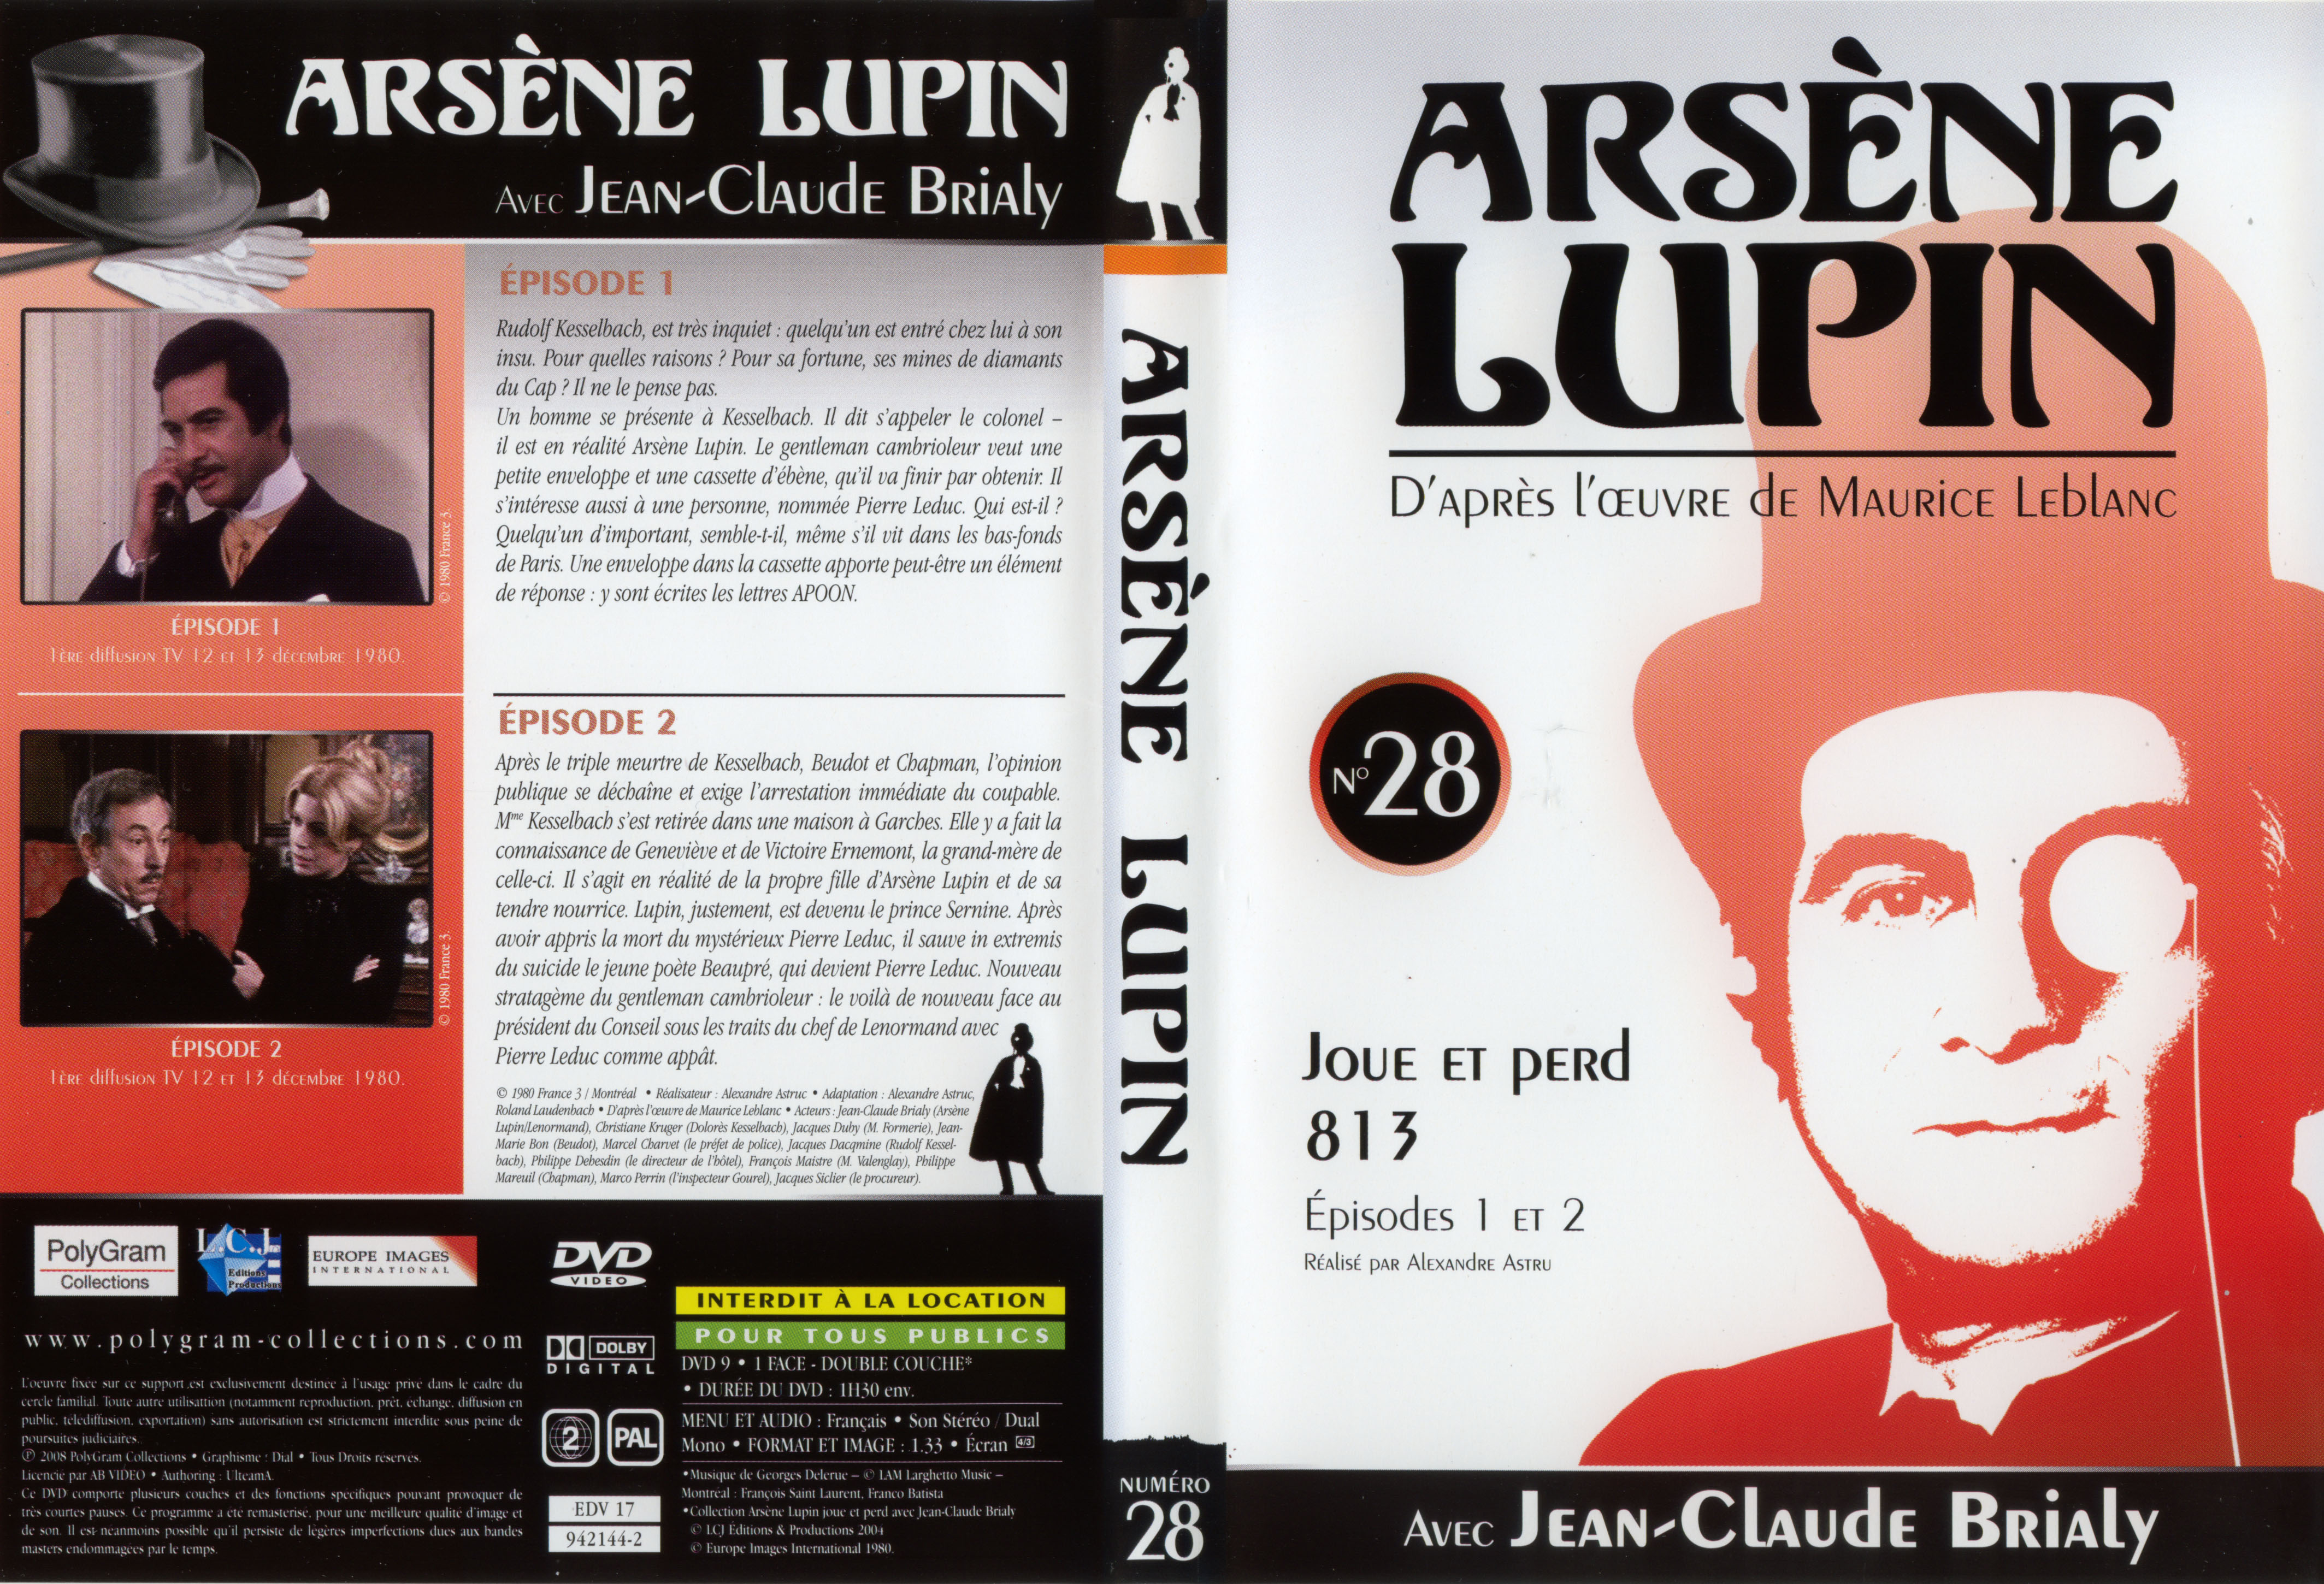 Jaquette DVD Arsene Lupin DVD 28